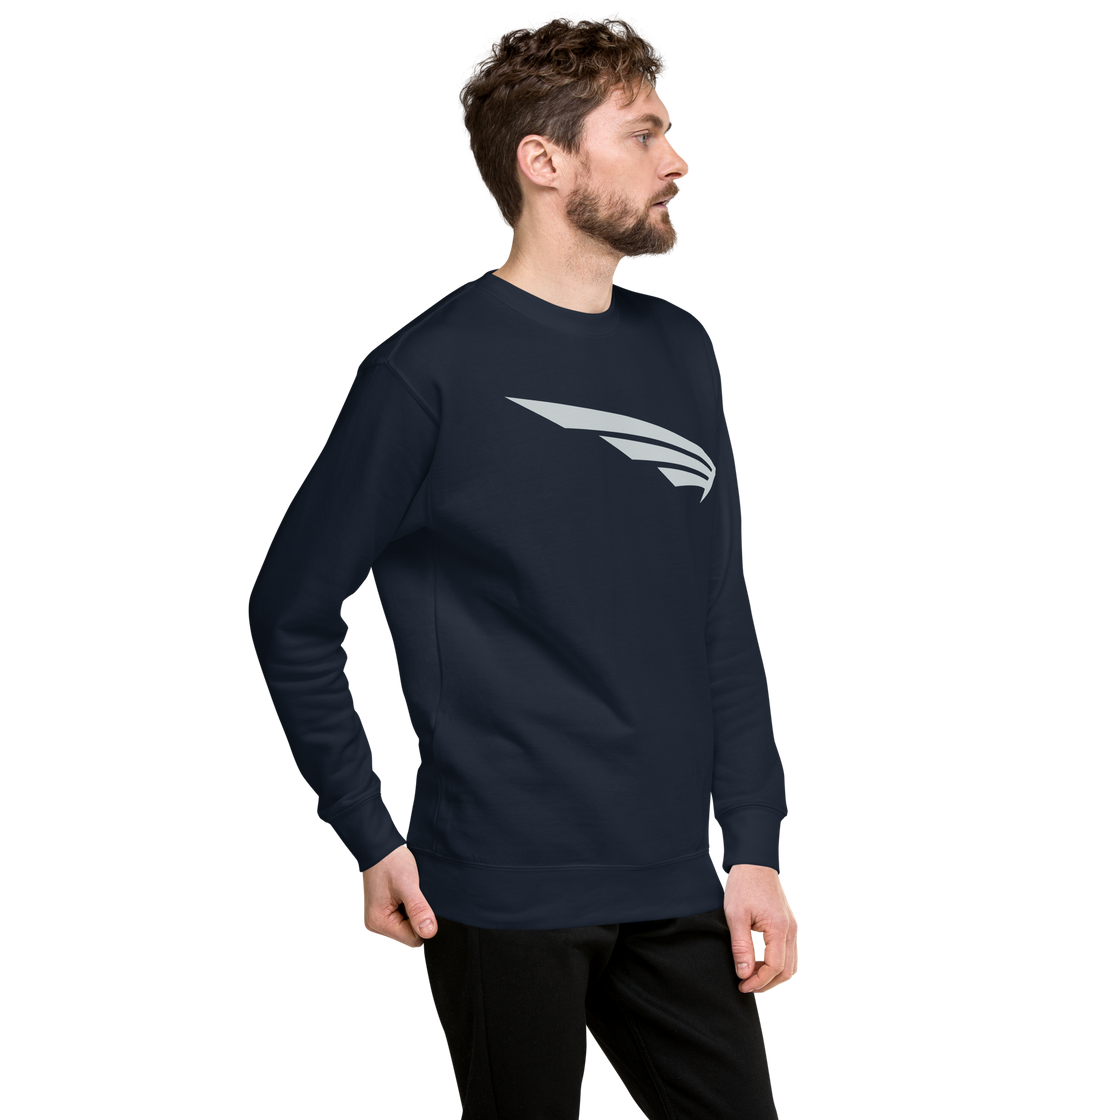 FLY³ Premium Sweatshirt | Flycube